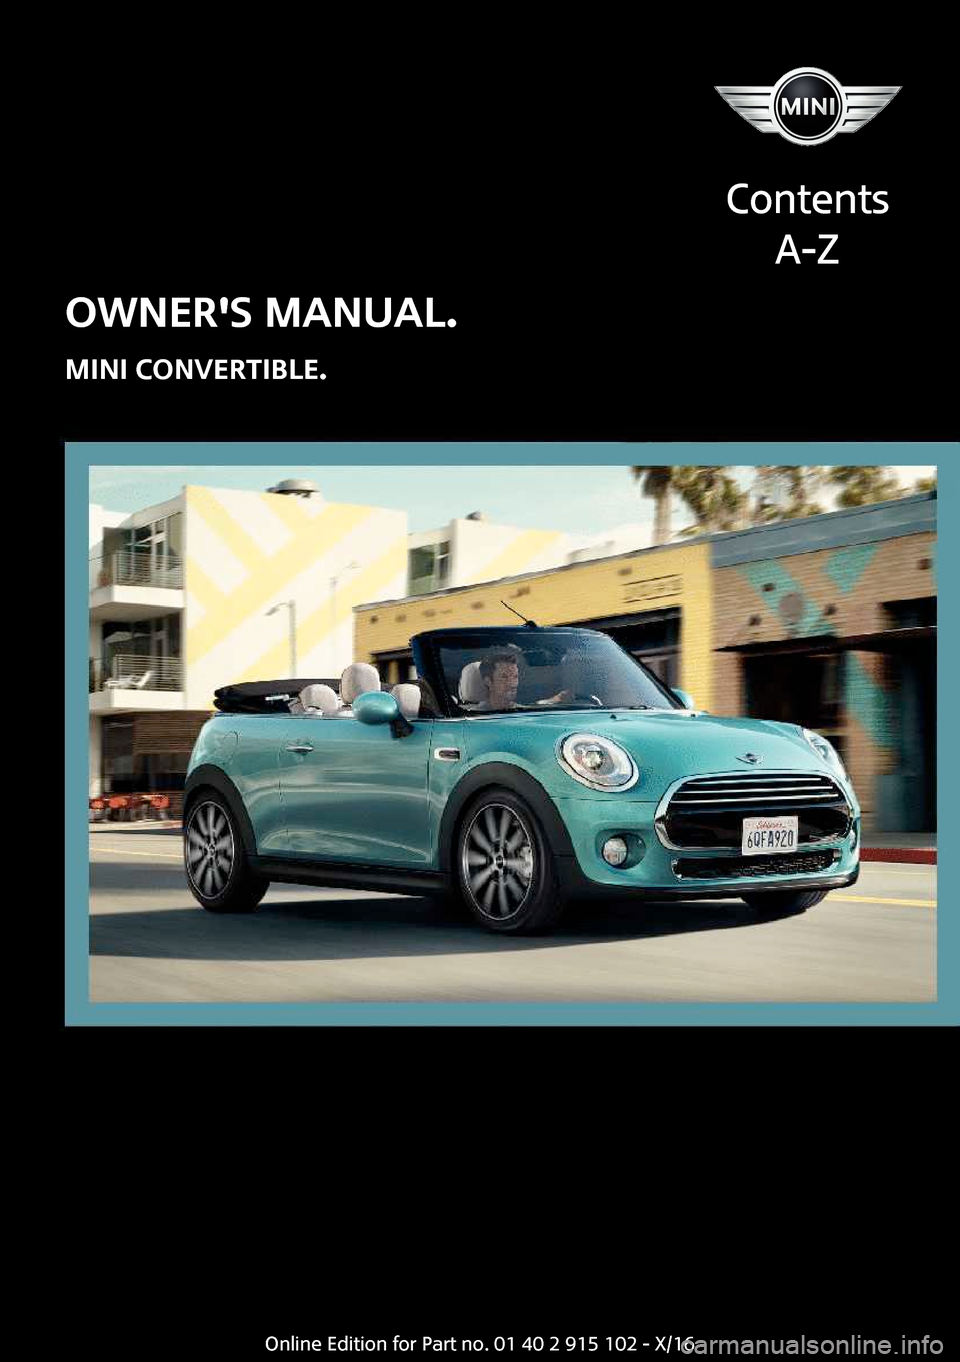 MINI Convertible 2017  Owners Manual �O�W�N�E�R��S��M�A�N�U�A�L�.
�M�I�N�I��C�O�N�V�E�R�T�I�B�L�E�.
�C�o�n�t�e�n�t�s �A�-�Z�O�n�l�i�n�e� �E�d�i�t�i�o�n� �f�o�r� �P�a�r�t� �n�o�.� �0�1� �4�0� �2� �9�1�5� �1�0�2� �-� �X�/�1�6  